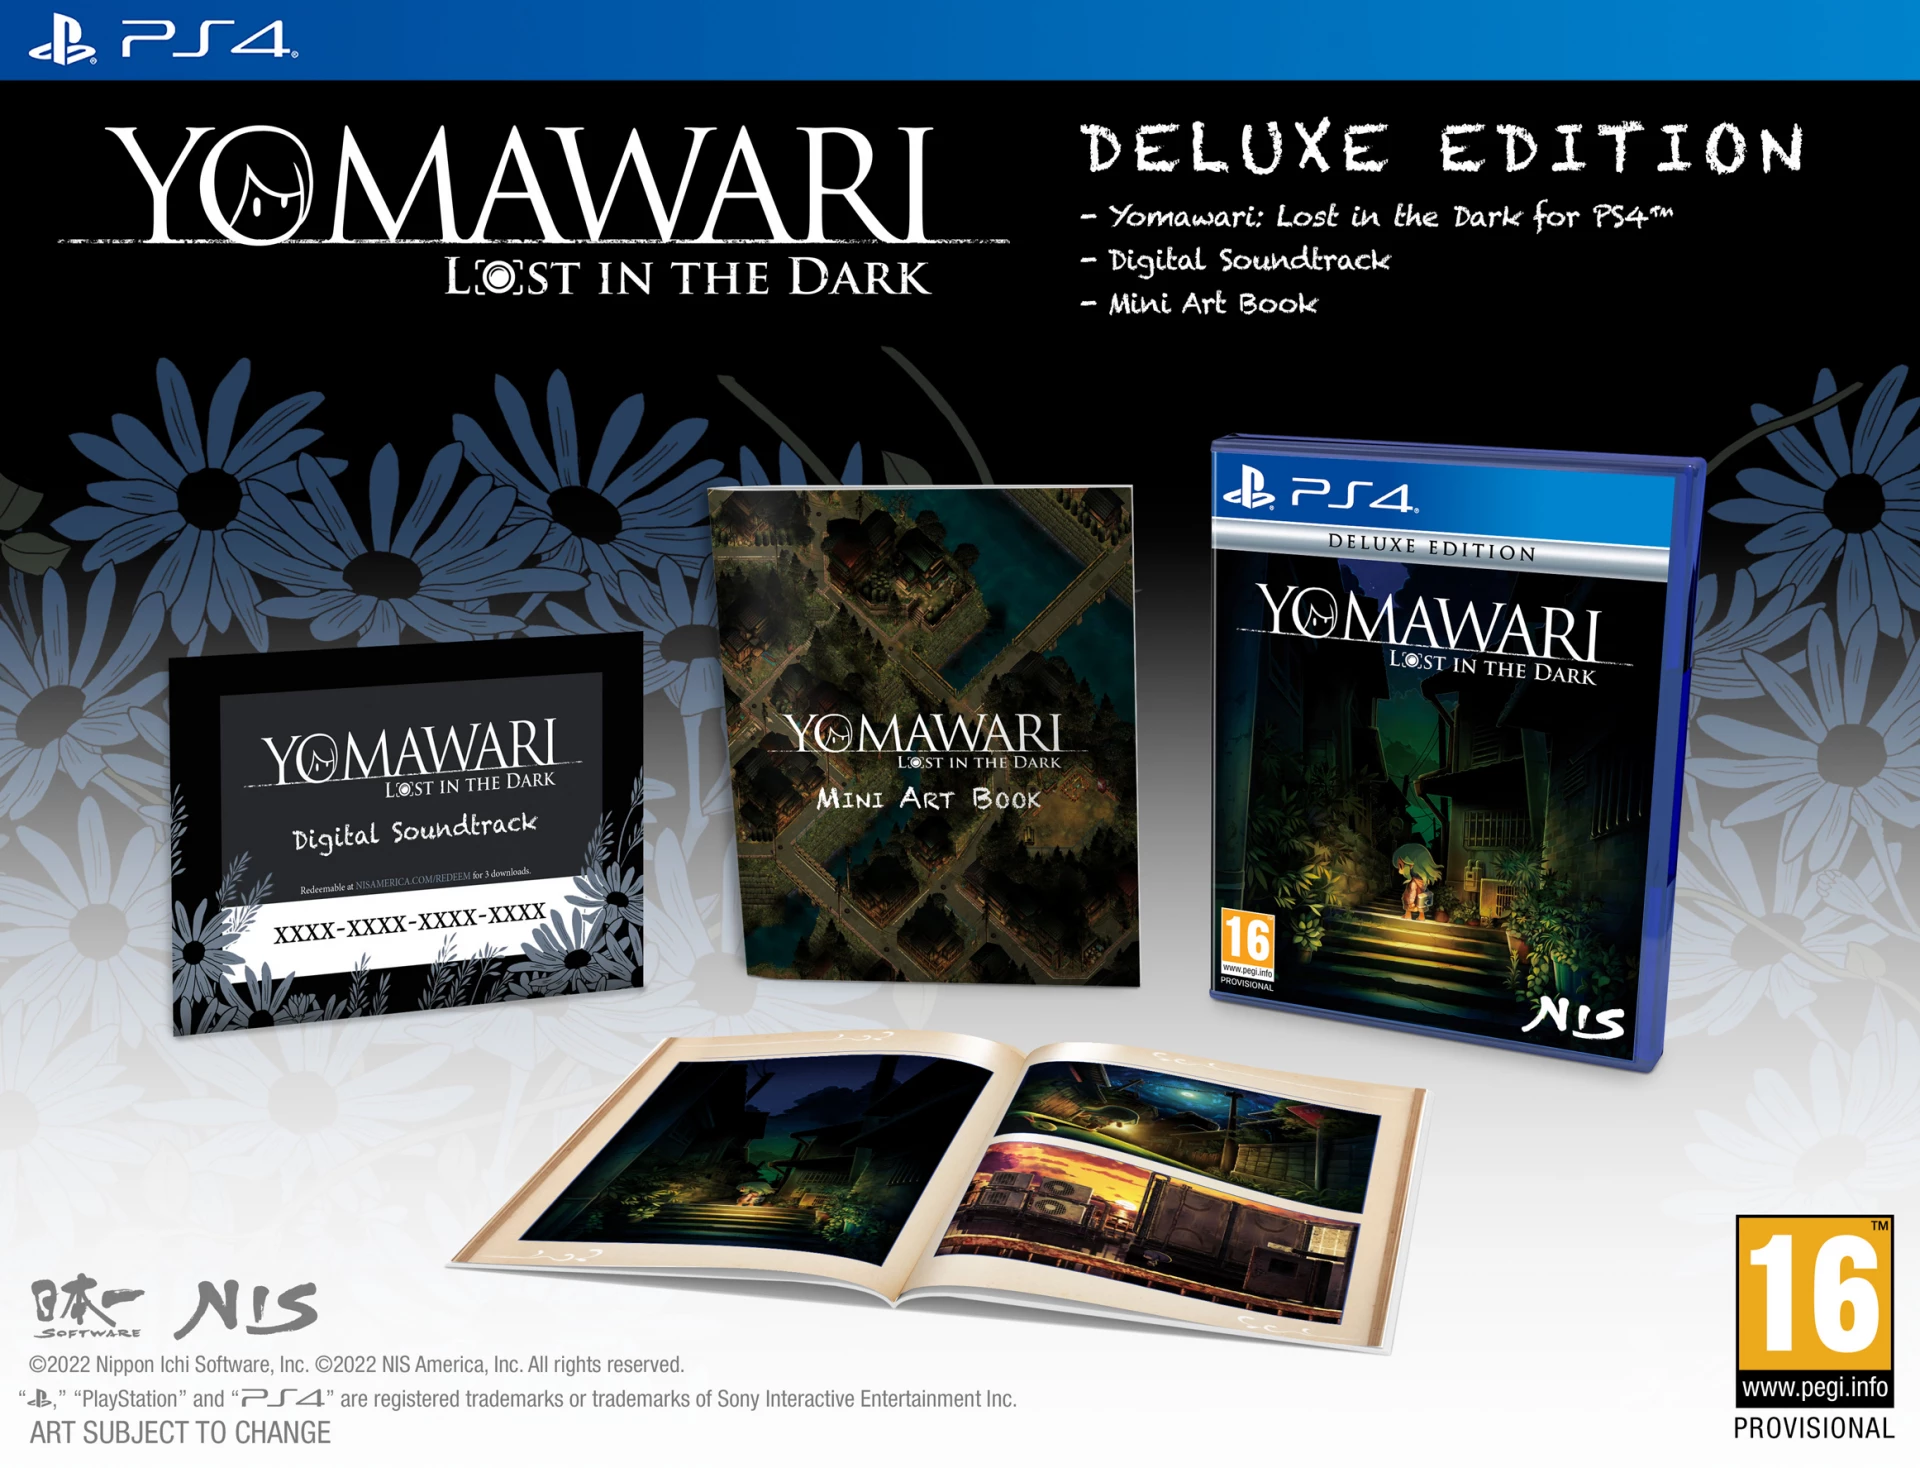 Yomawari: Lost in the Dark - Deluxe Edition (PS4), NIS America